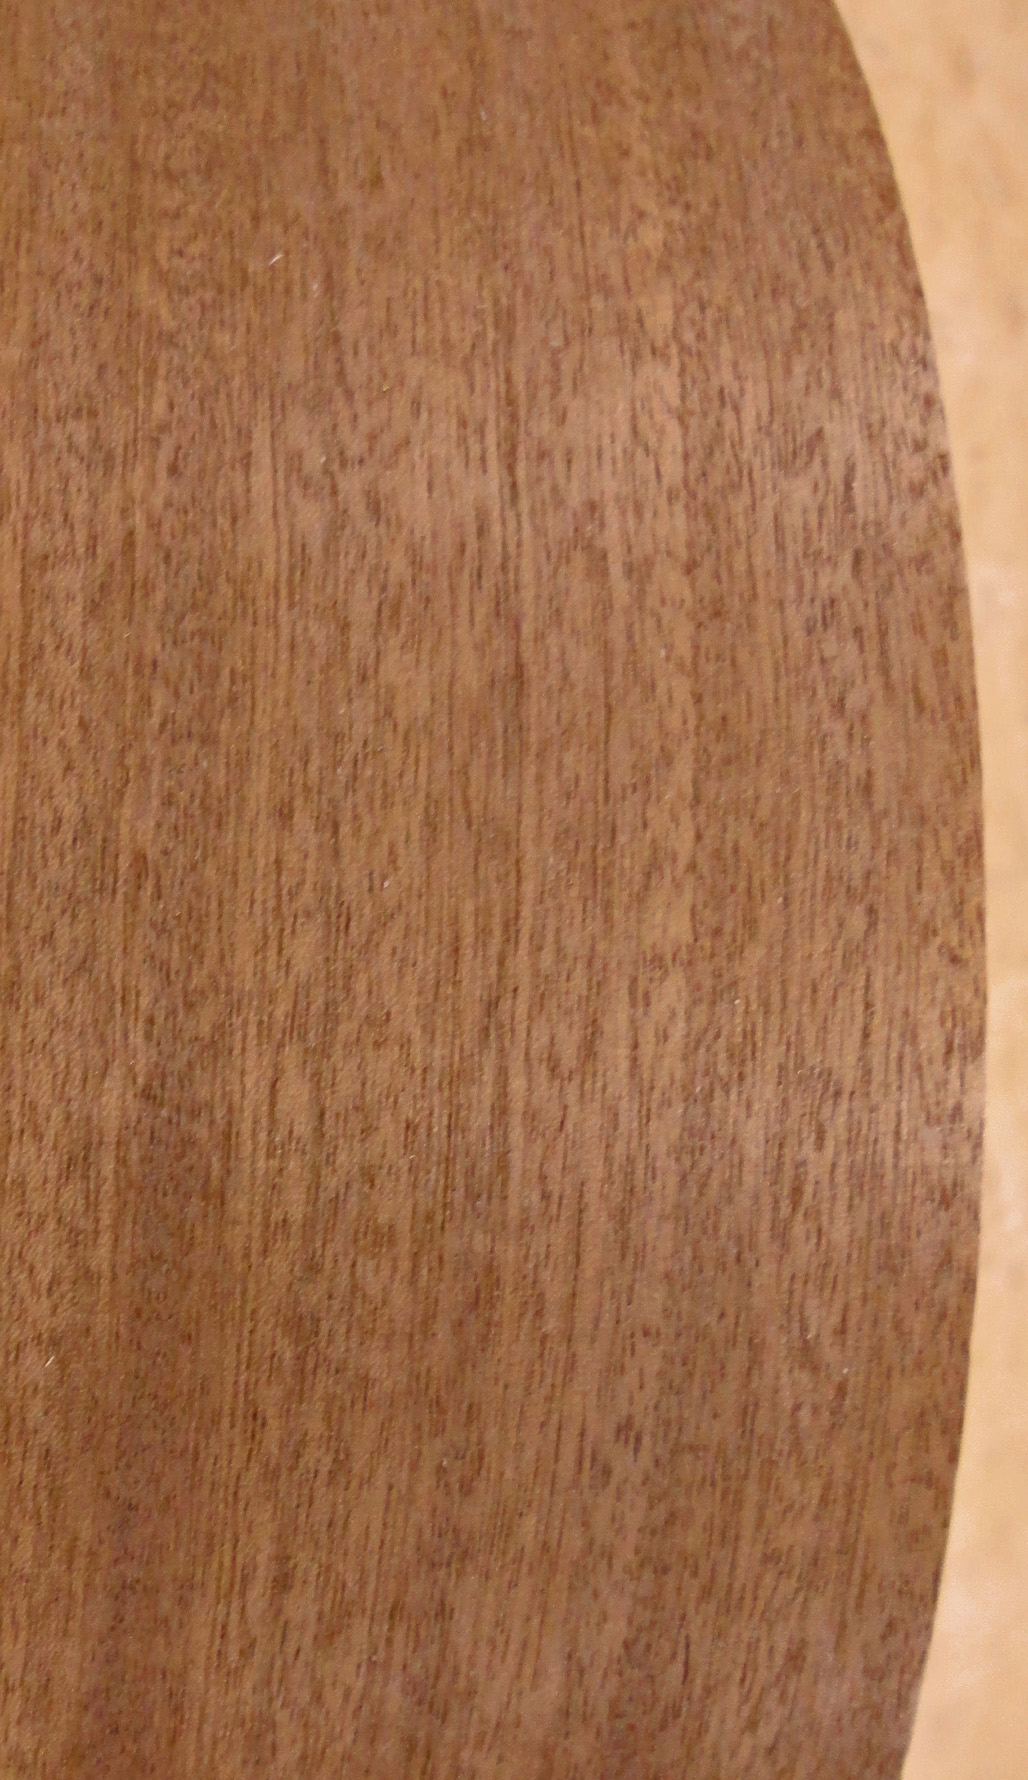 Sapele Ribbon Mahogany wood veneer edgebanding 4" x 120" with preglued adhesive 